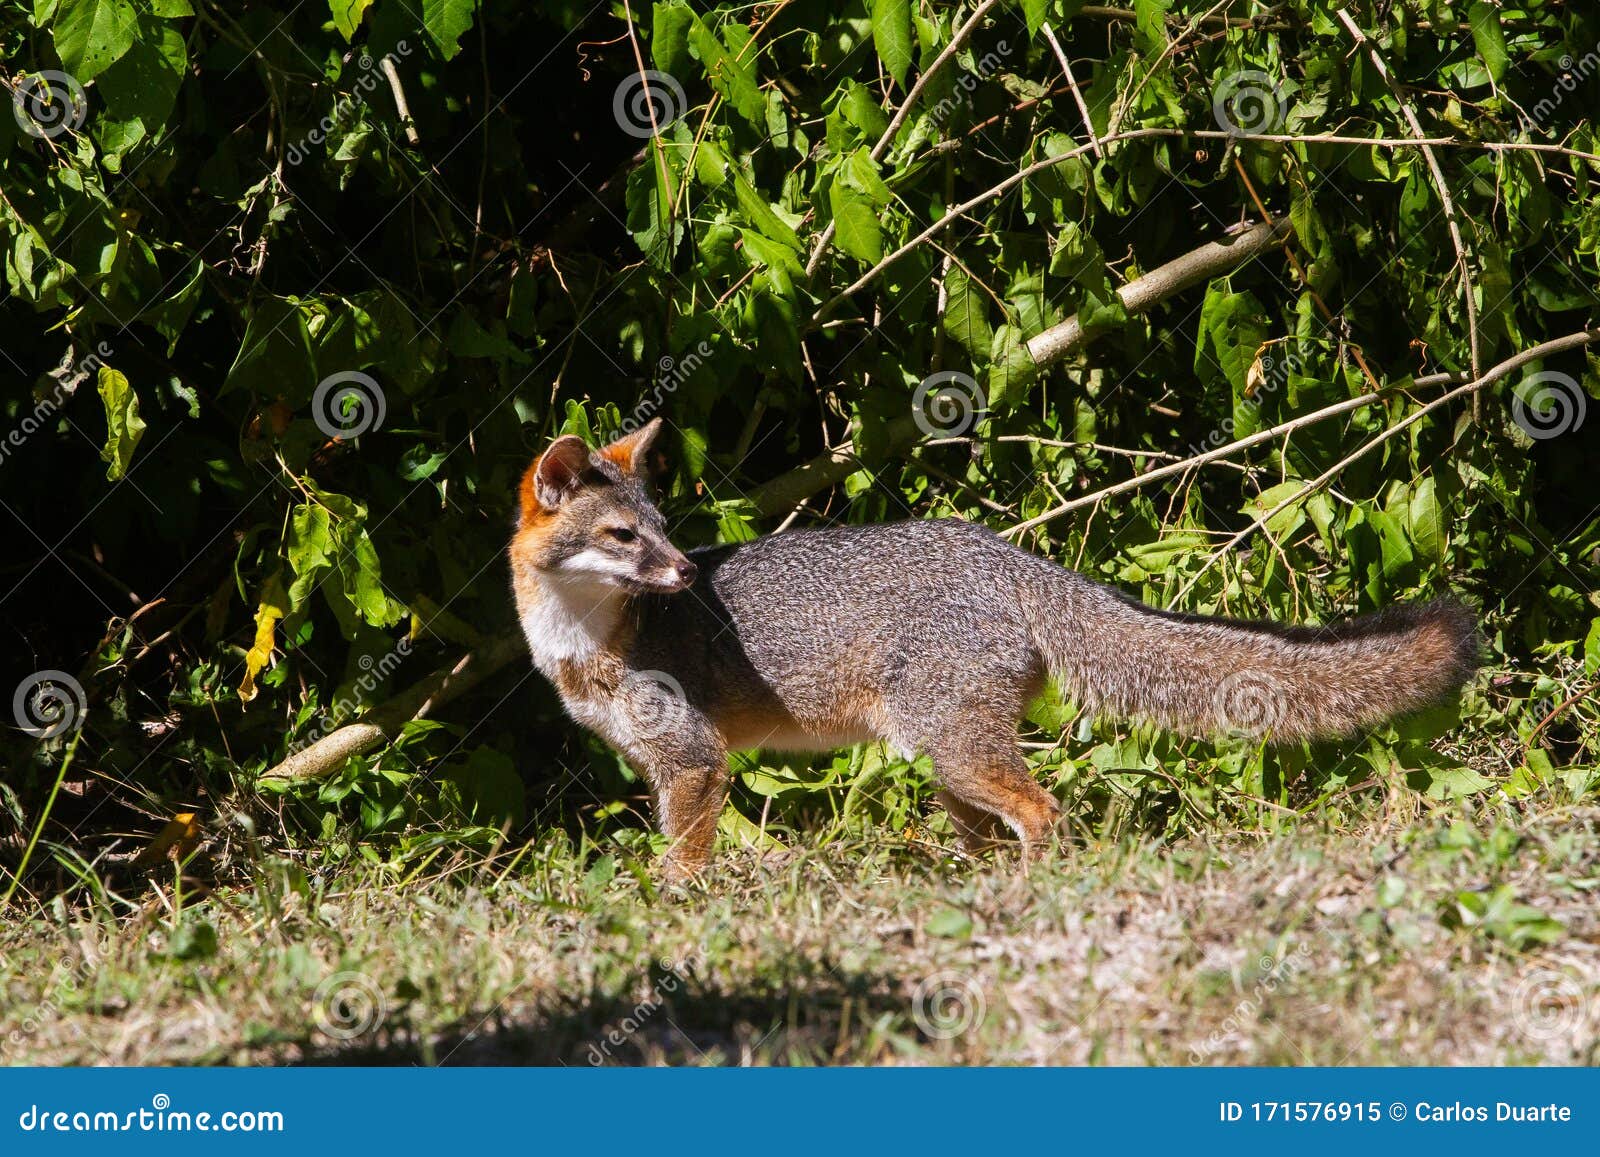 wildlife: a gray fox seen in the wild in guatemala